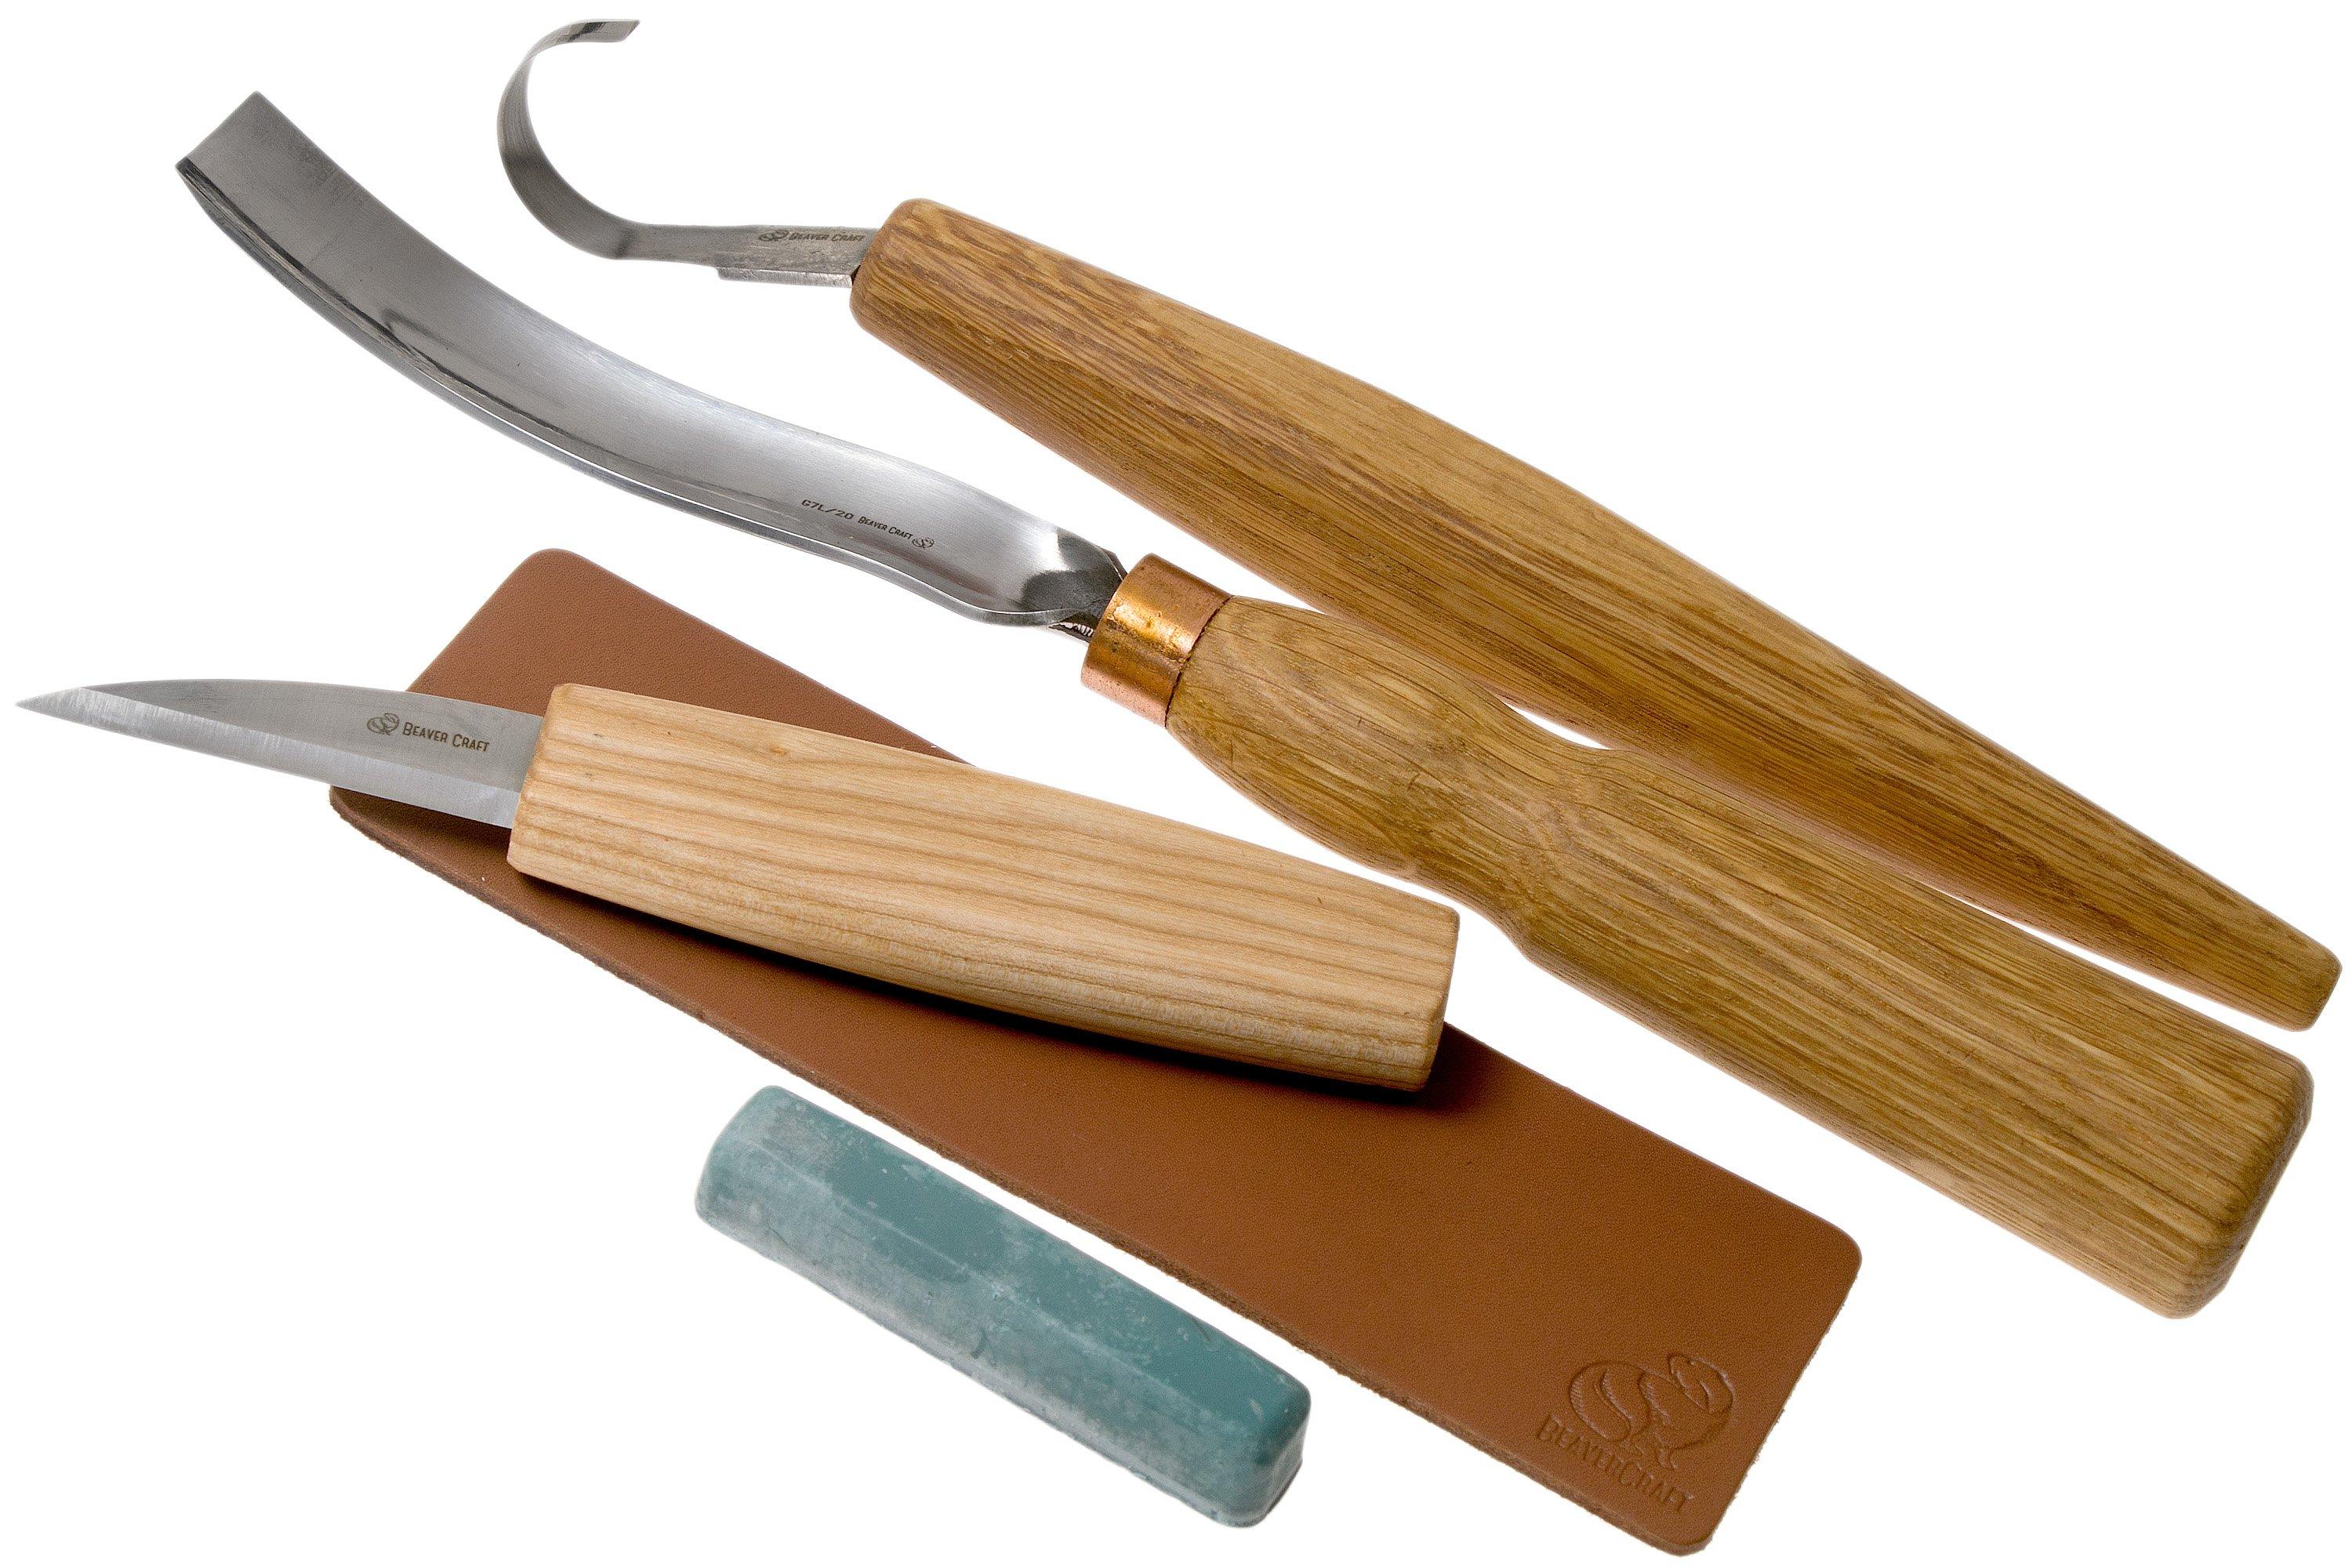 BeaverCraft Spoon Carving Set S47 wood carving set